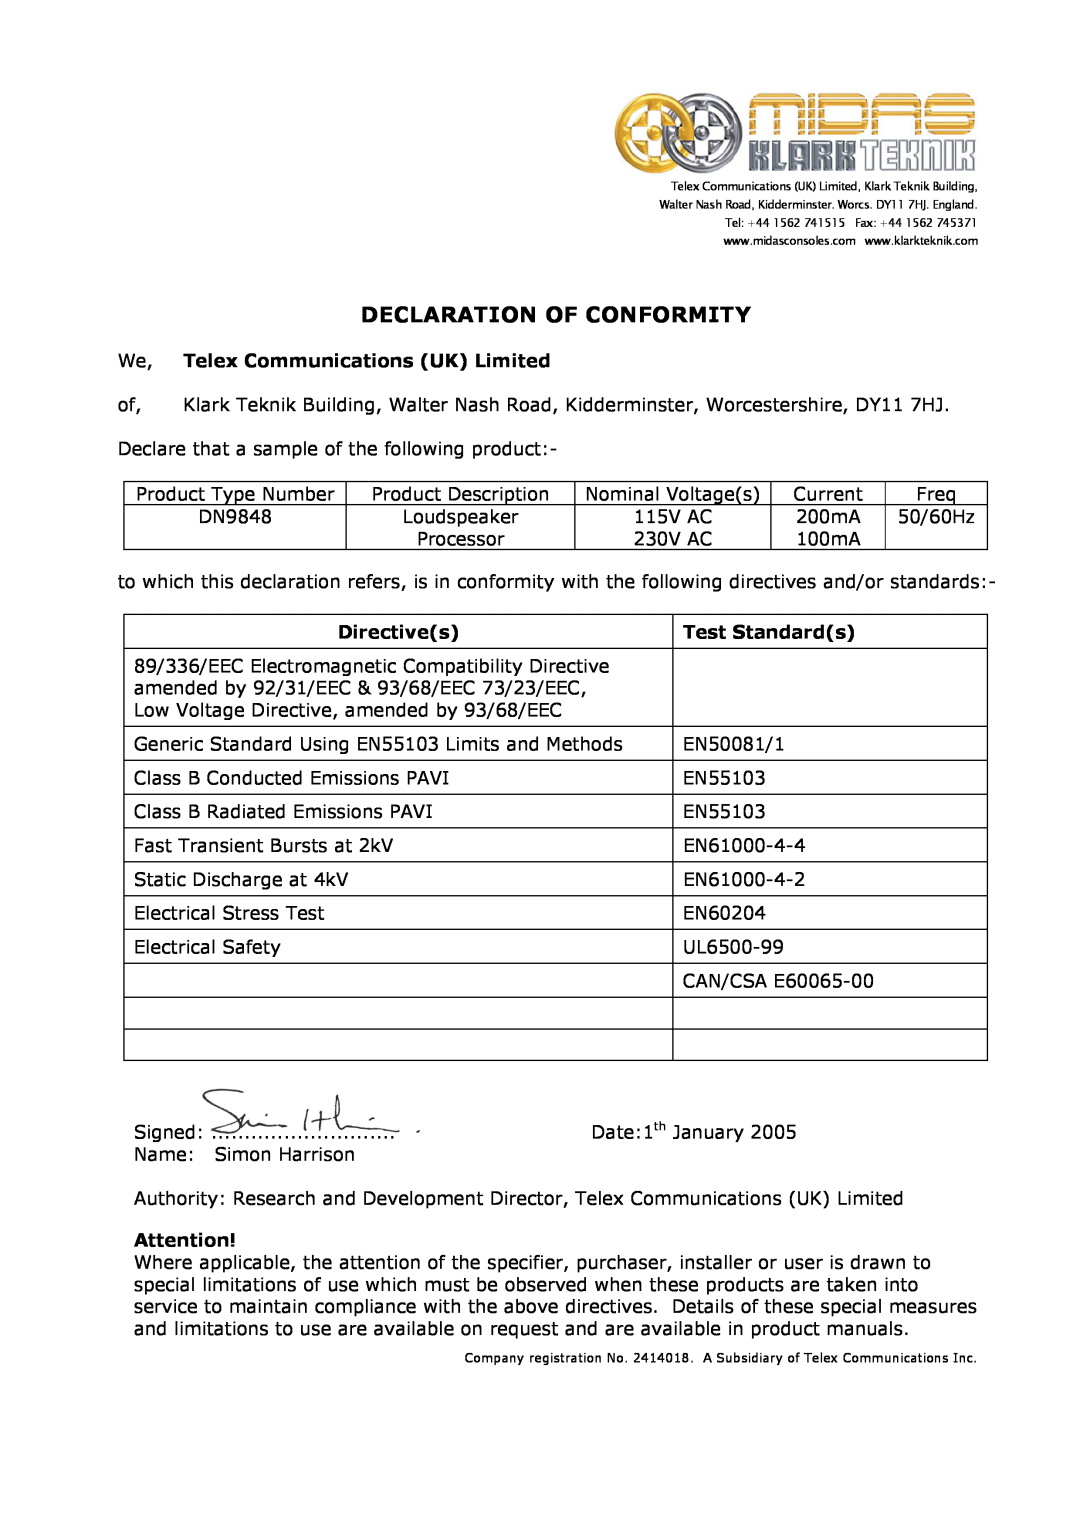 Telex DN9848 Loudspeaker Processor Declaration Of Conformity, We, Telex Communications UK Limited, Directives 